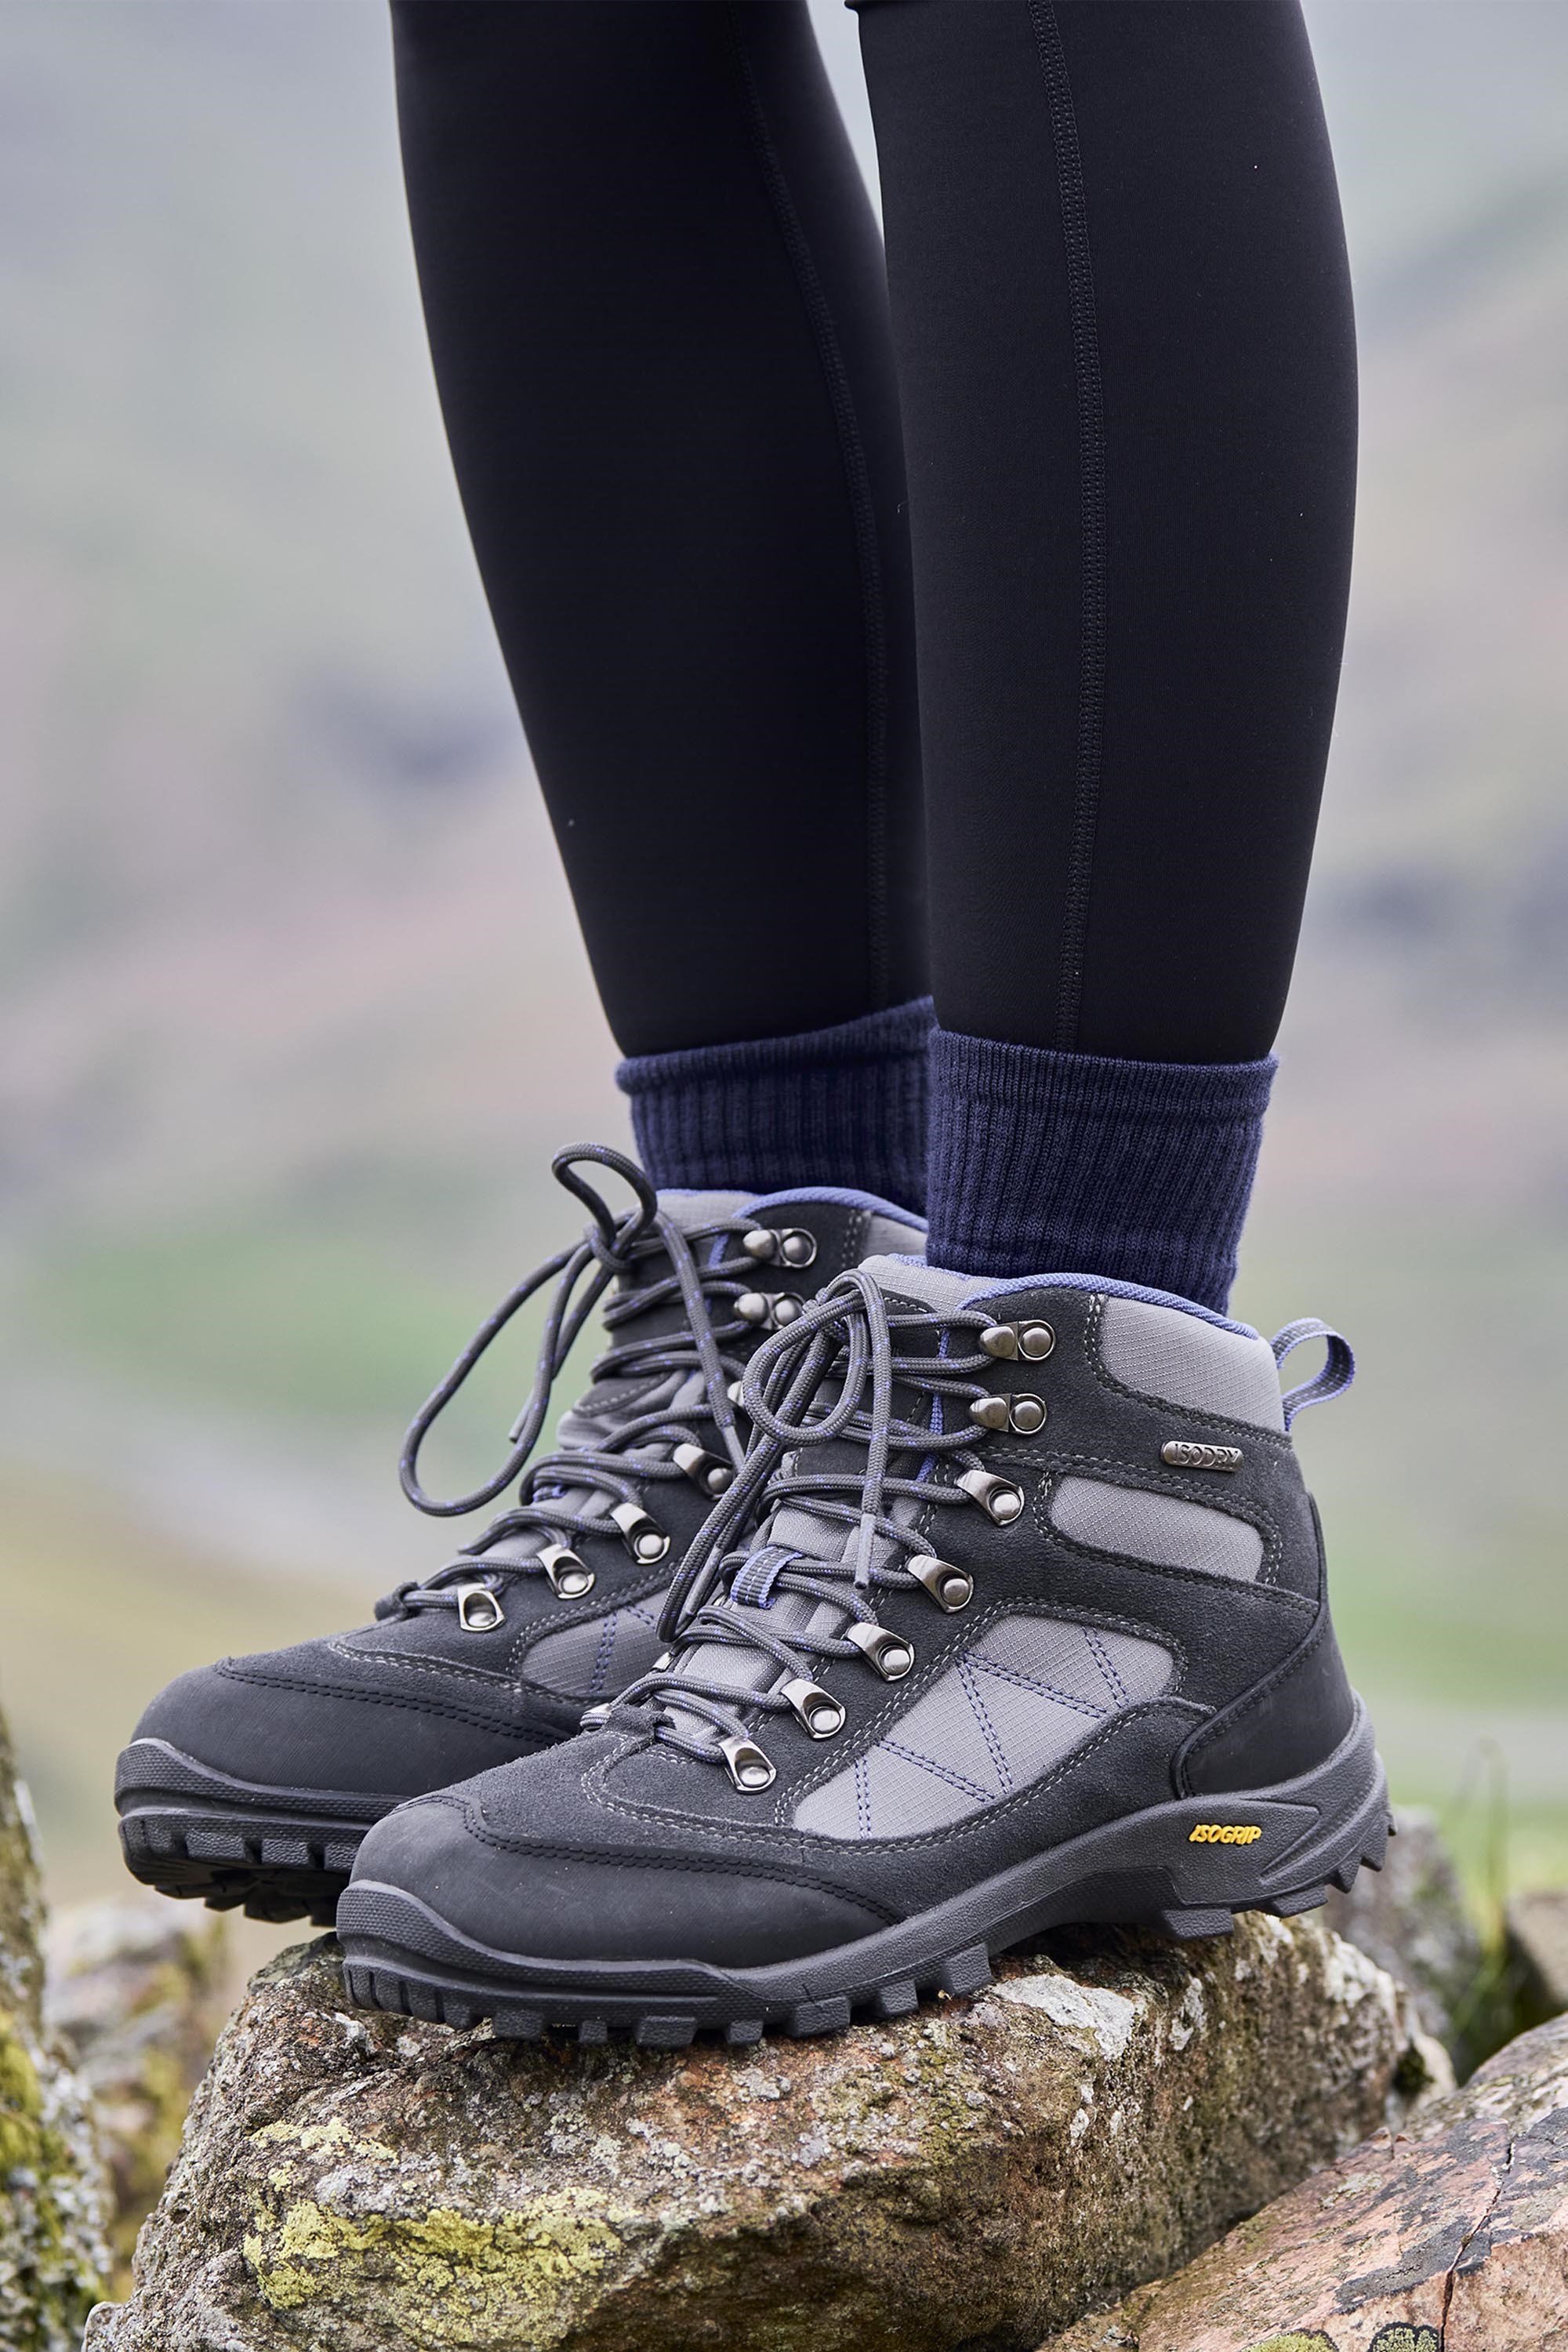 Peter Storm Women's Water Resistant Walking Leggings,Hiking and